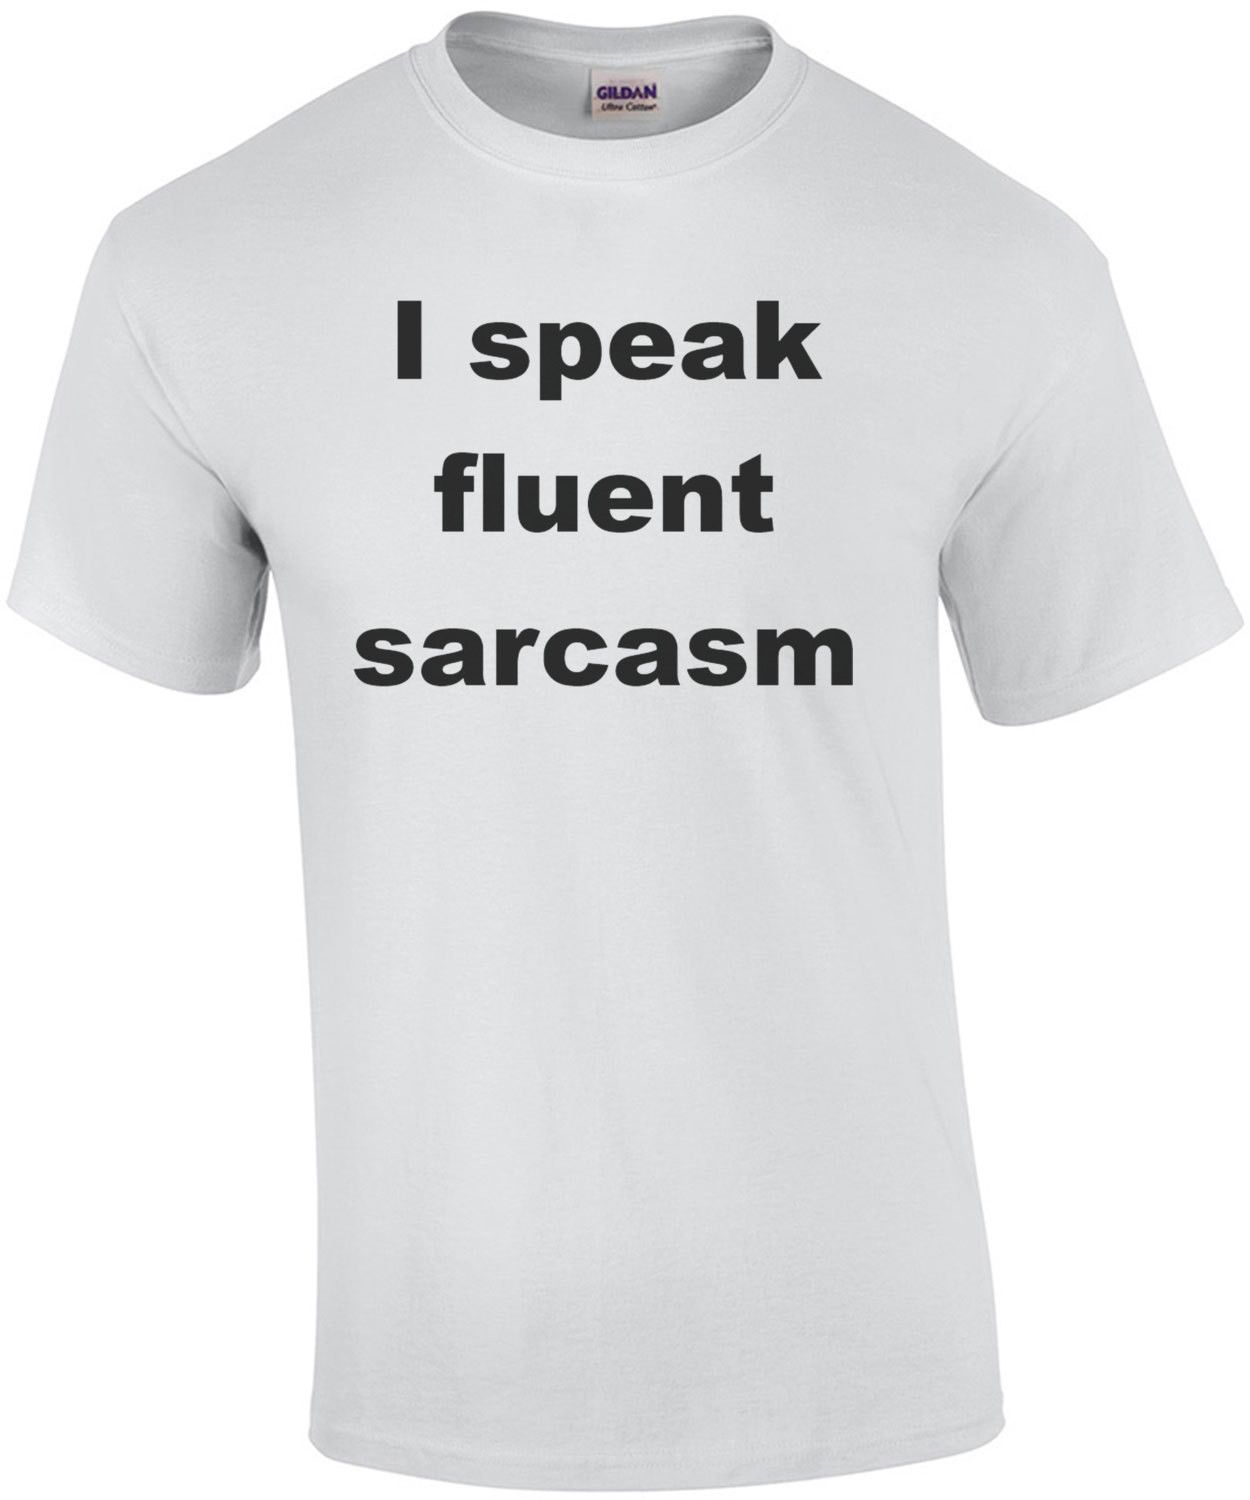 I speak fluent sarcasm. Shirt